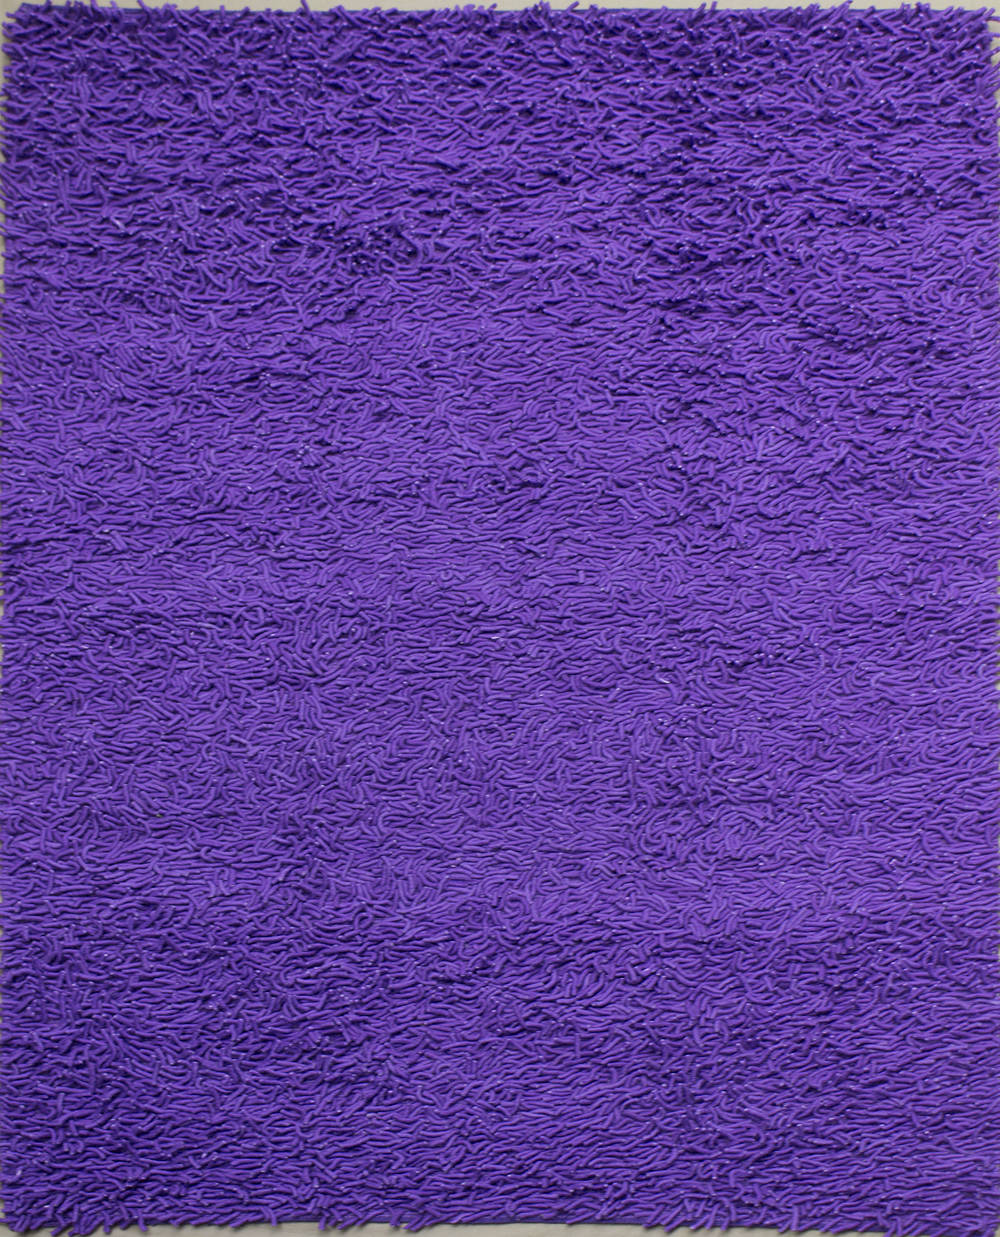 Primo Ultraviolet Wool Shag Rug Product Image